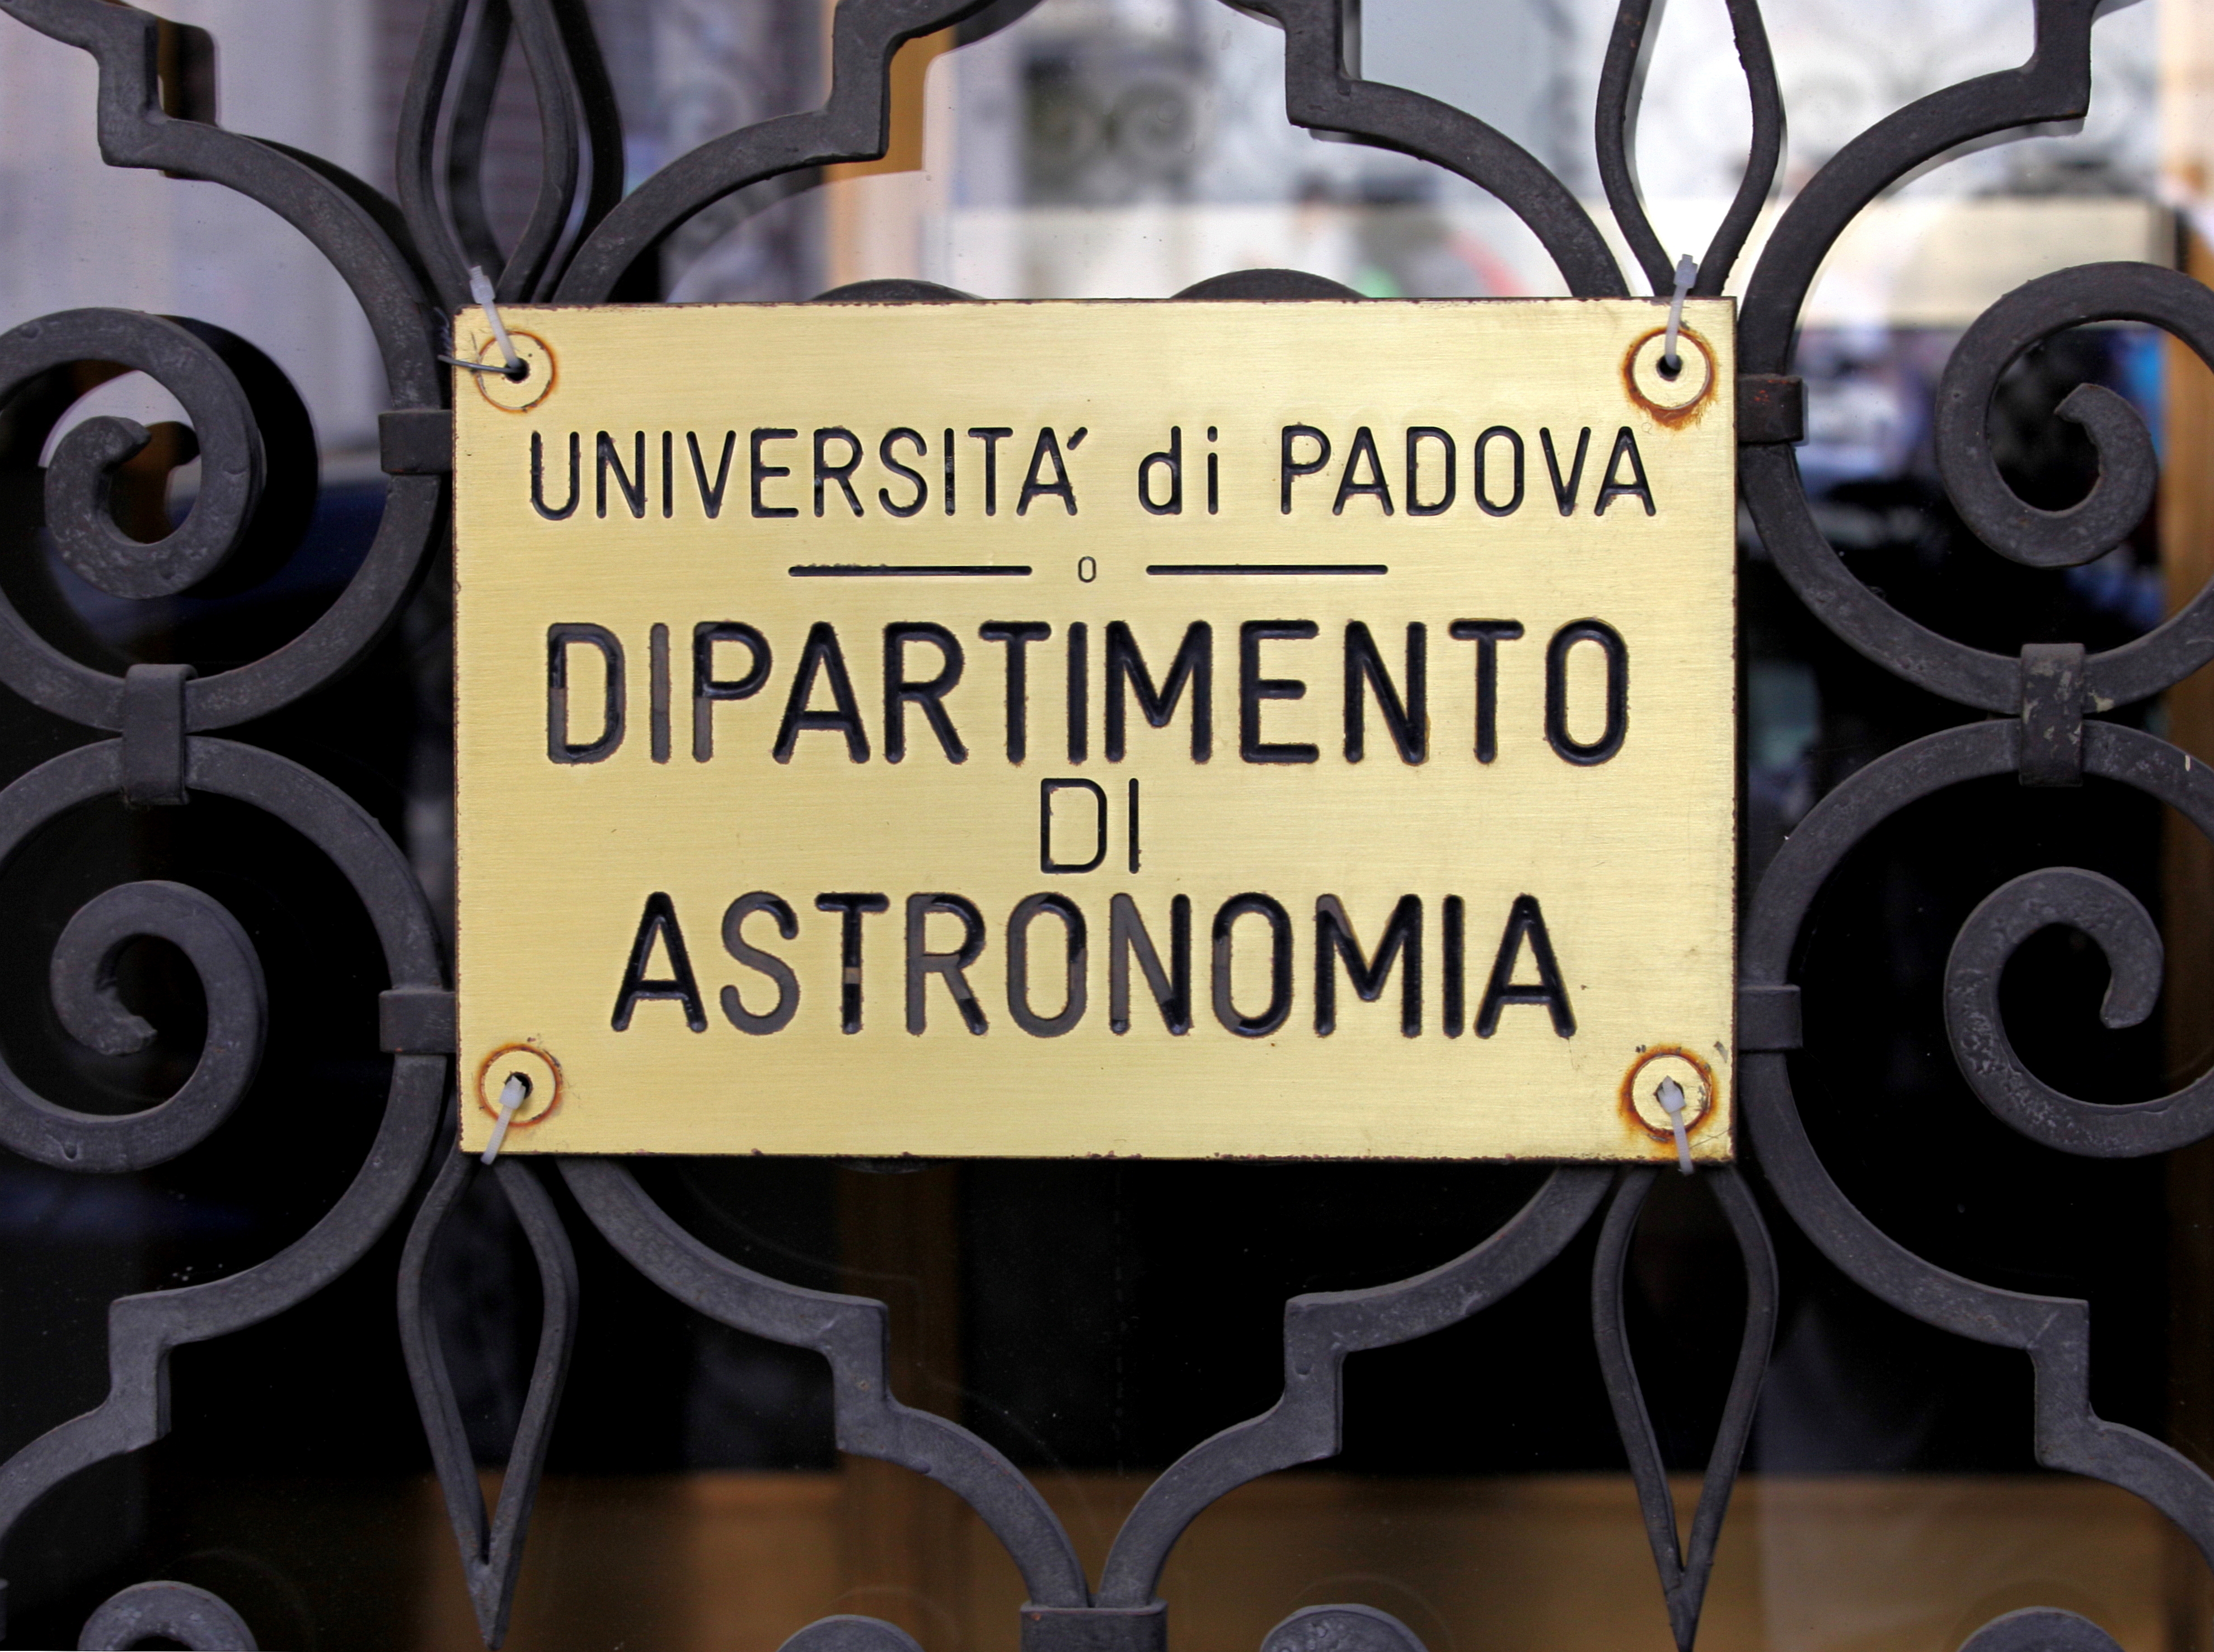 Padua university, Padua city, Italy, Europe, August 2013, picture 22